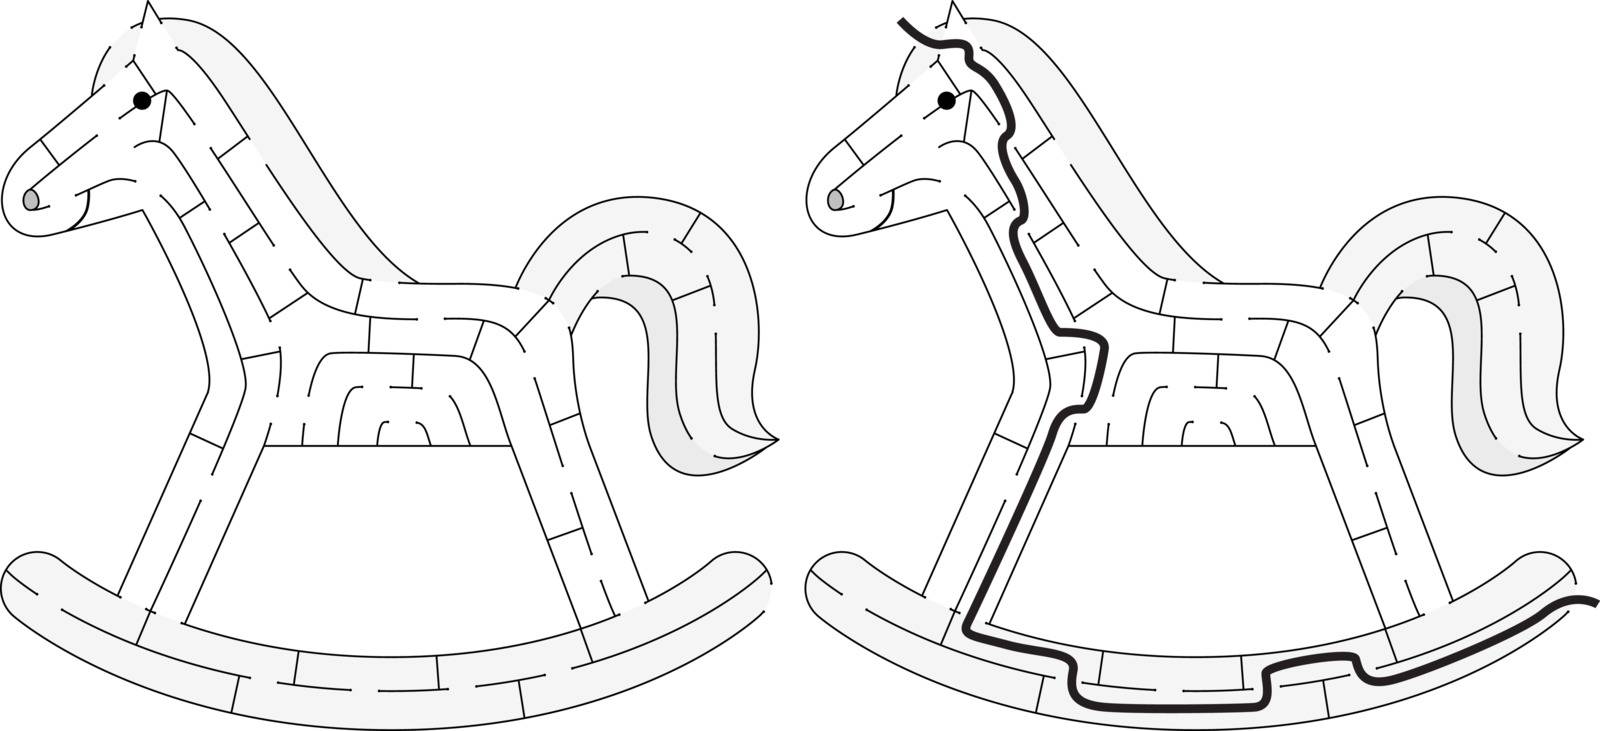 Rocking horse maze by nahhan